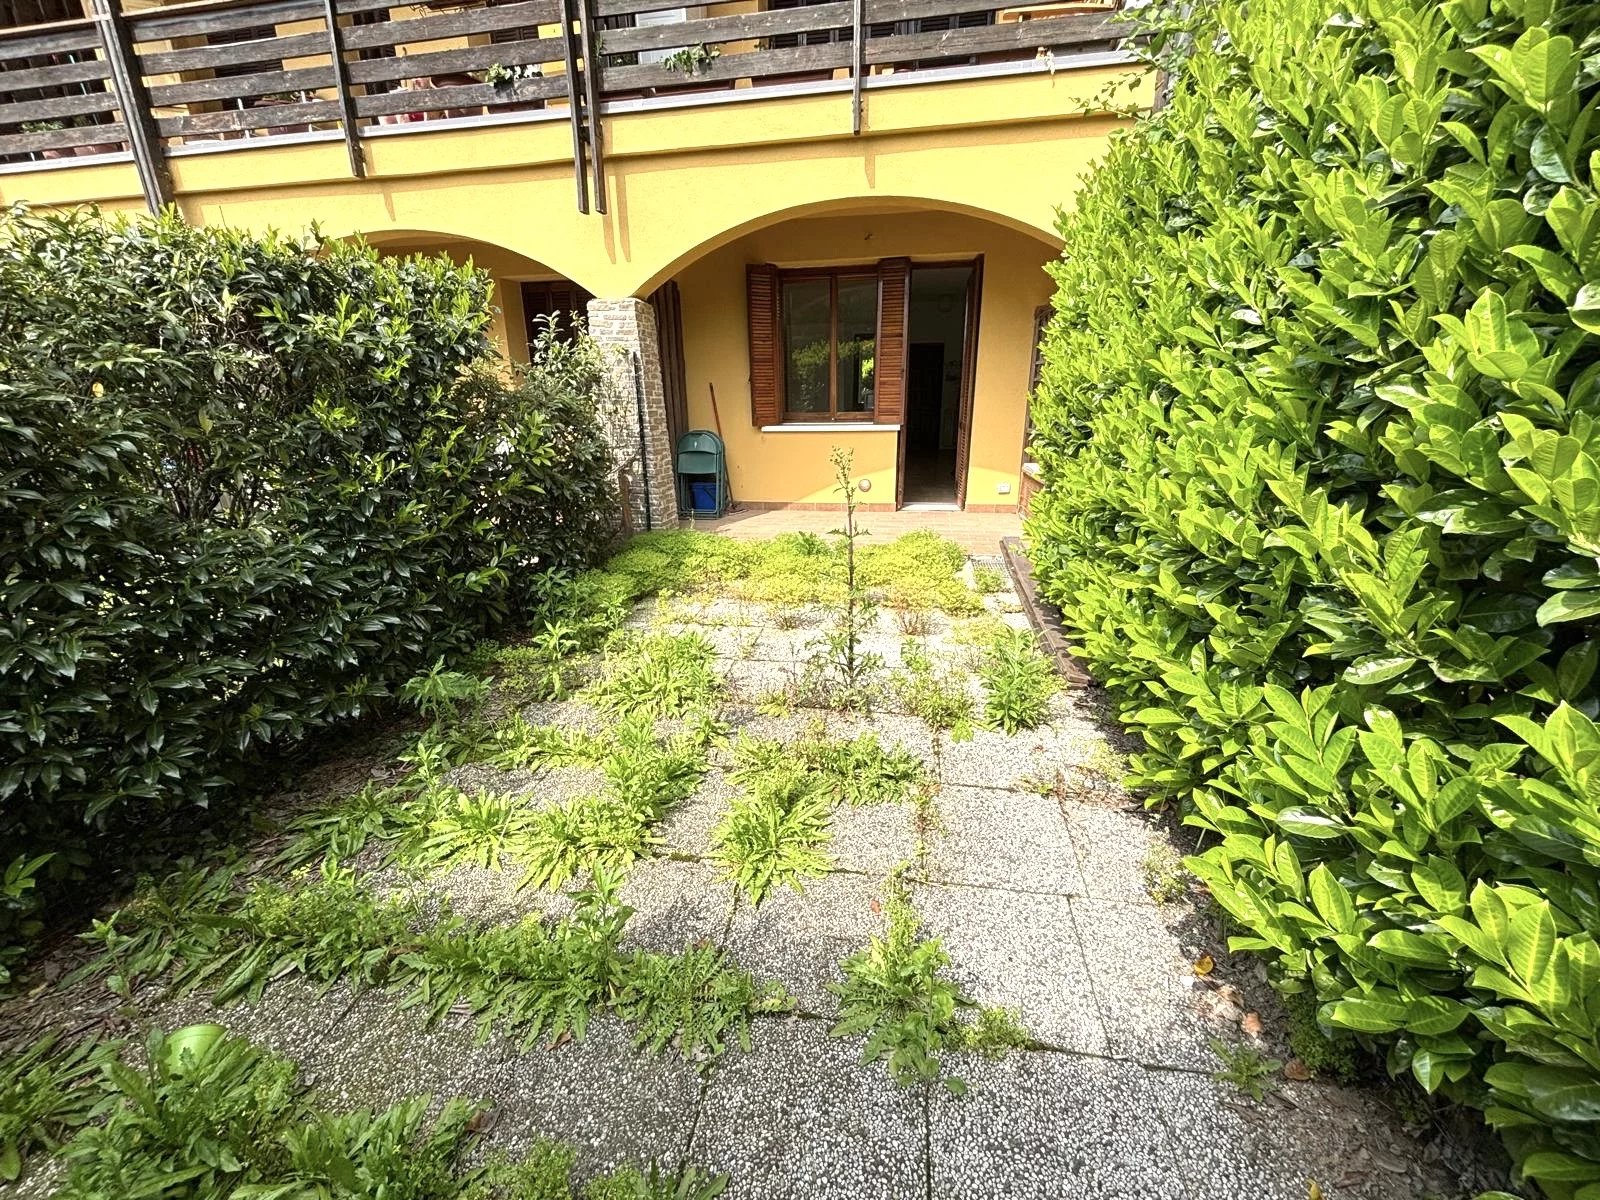 Sale Apartment - Guanzate - Italy